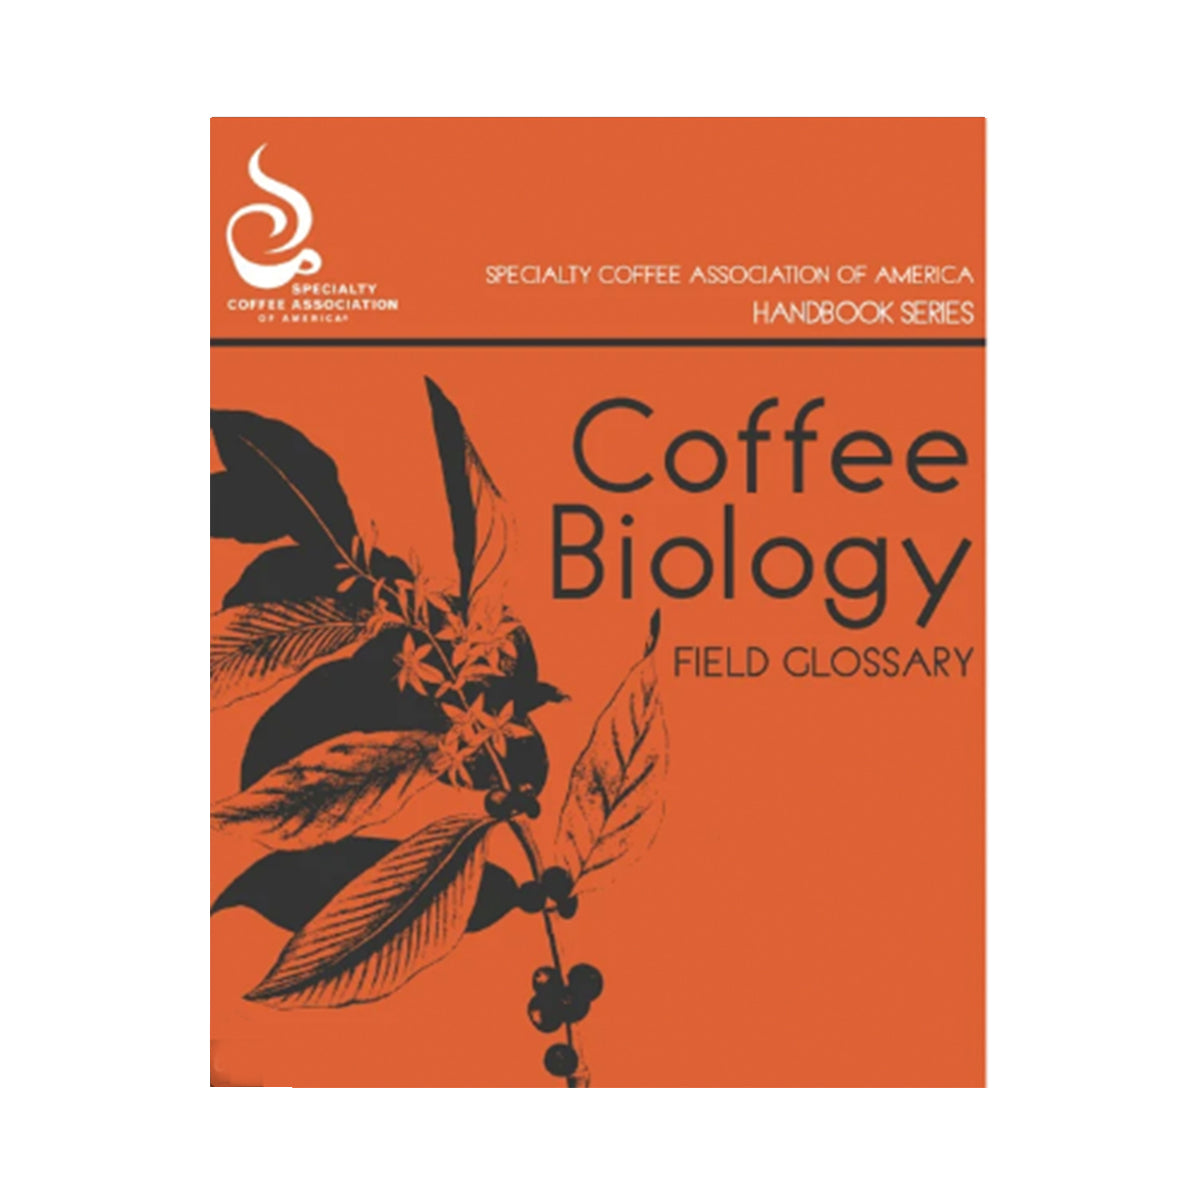 Libro Coffee Biology Field Glossary Handbook (First Edition)